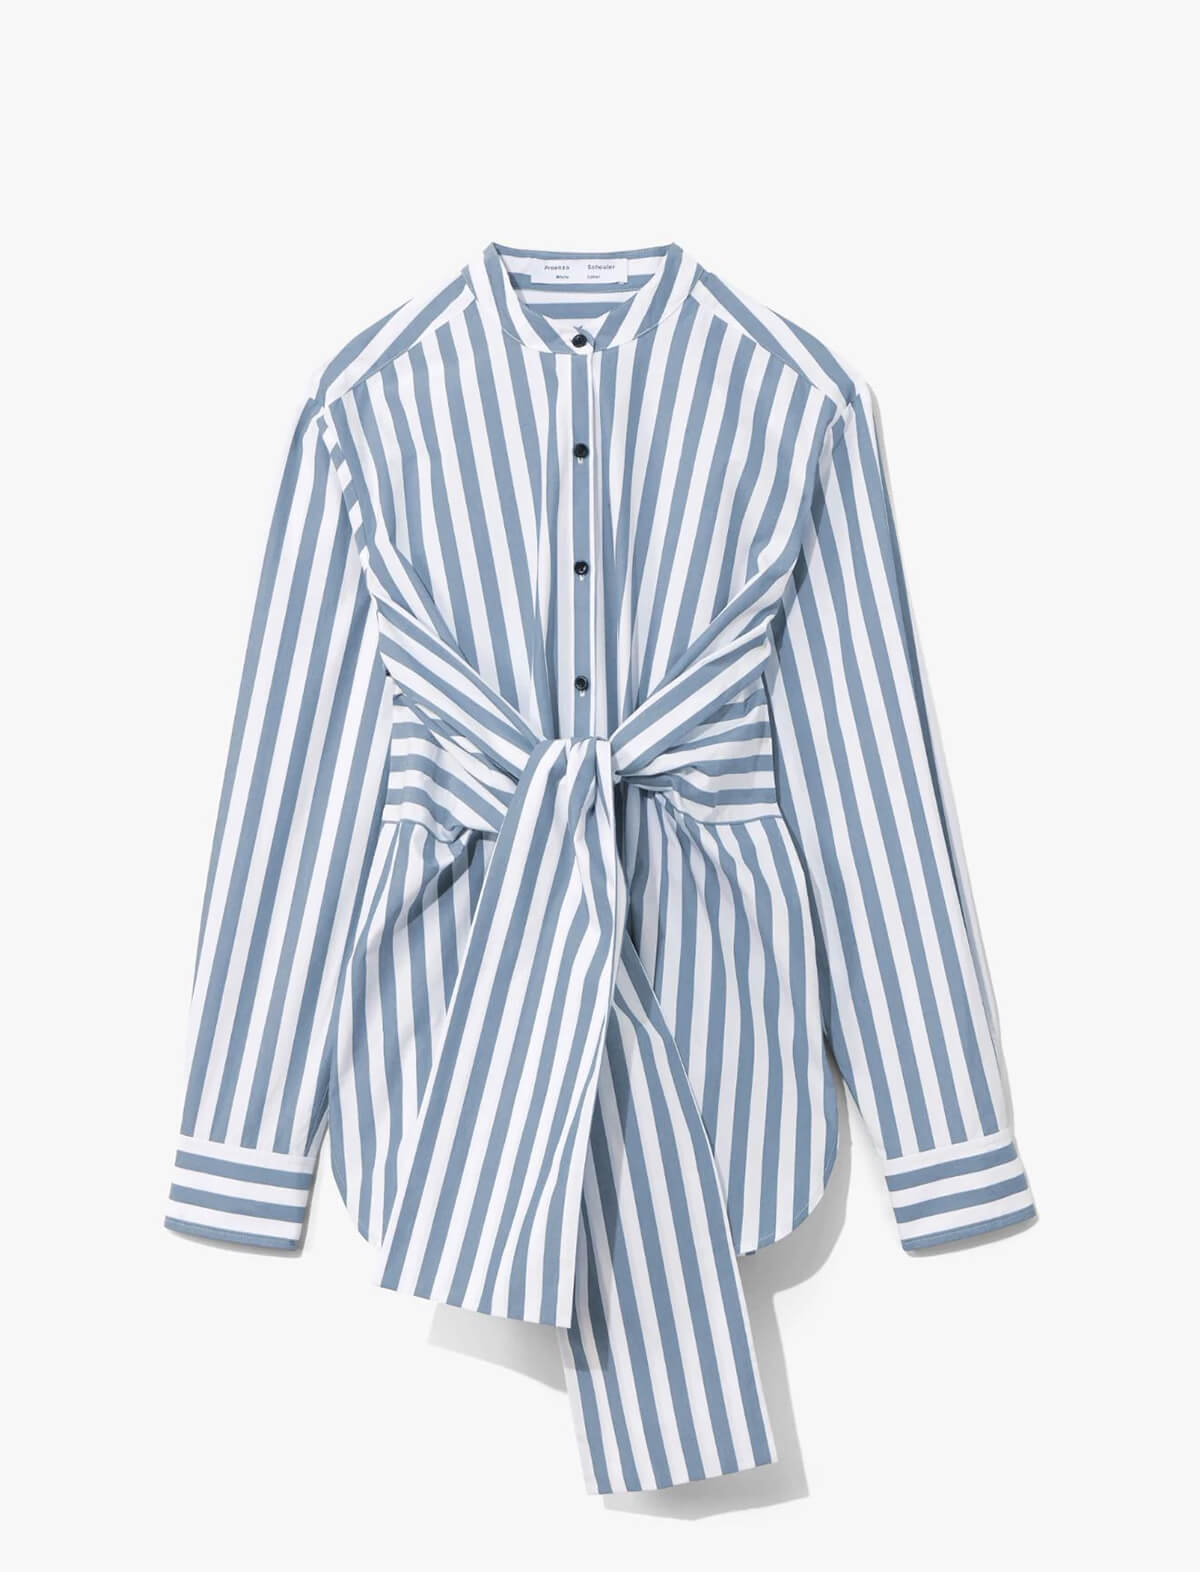 PROENZA SCHOULER WHITE LABEL Poplin Waist-tie Shirt in White/Blue Stripes